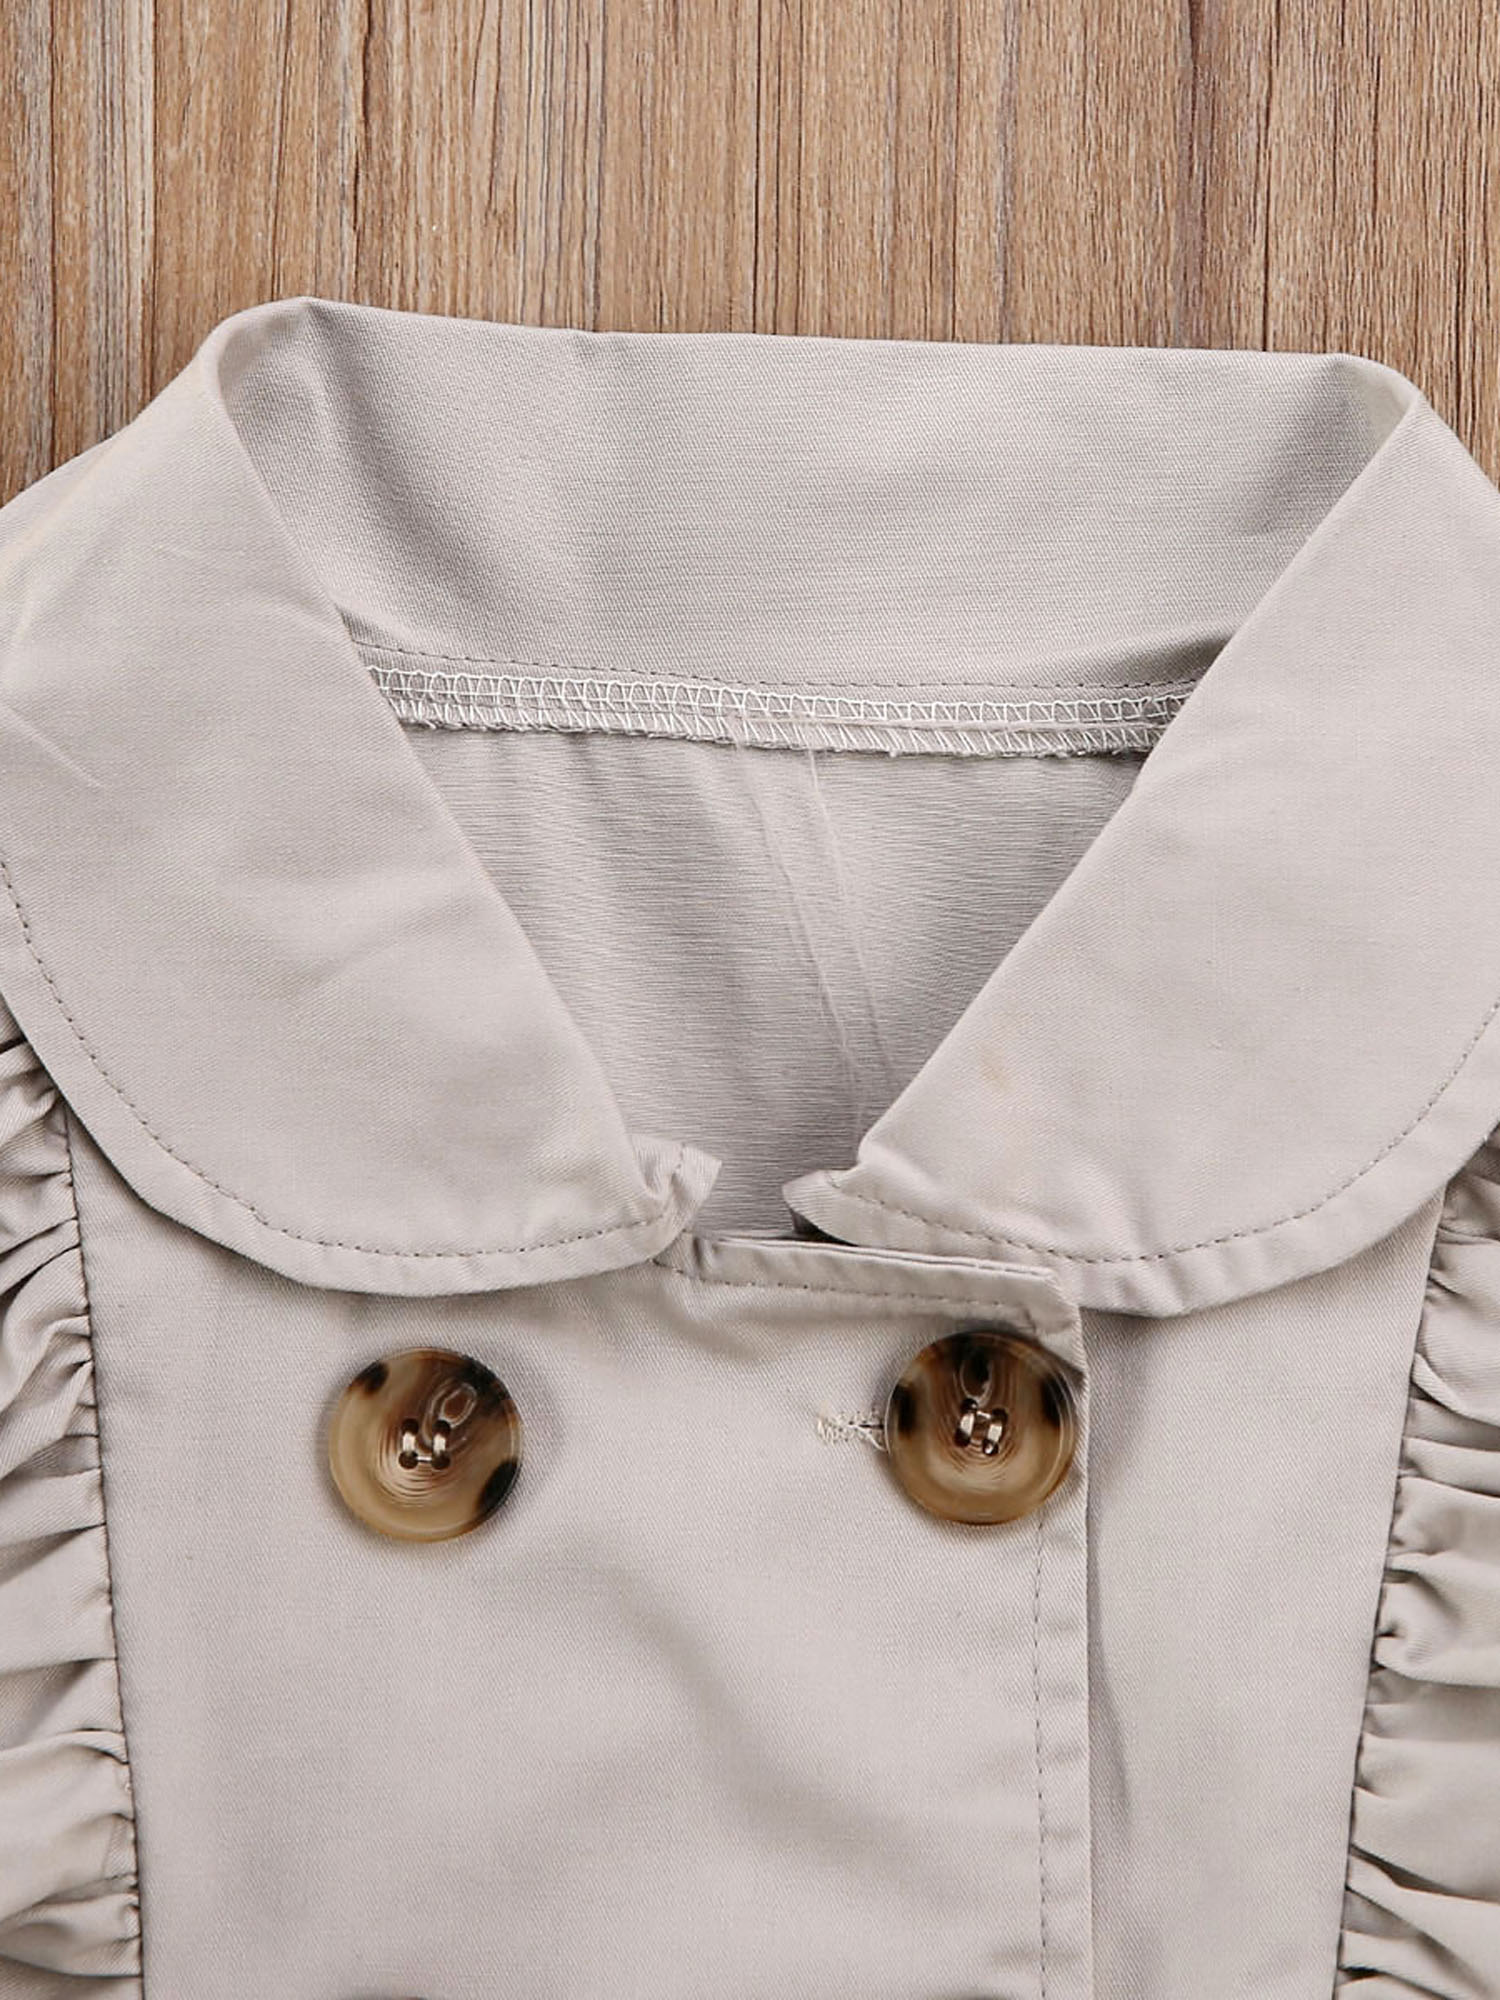 Xingqing Toddler Baby Girl Trench Coat Casual Ruffle Jacket Windbreaker Outerwear - image 4 of 6